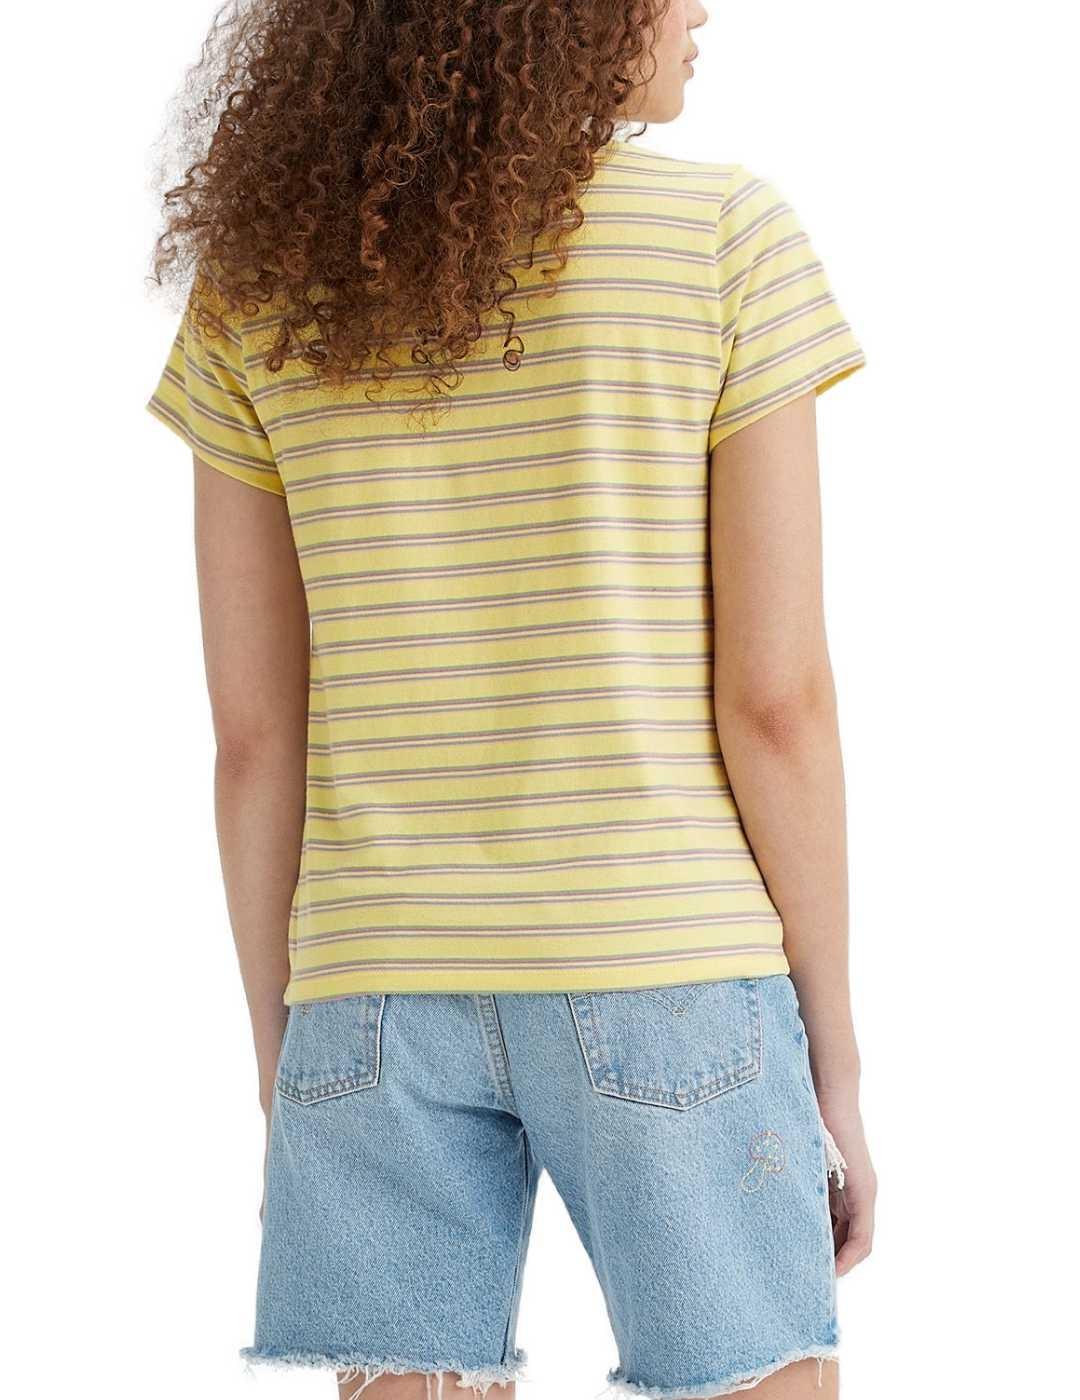 Camiseta Levis a rayas amarillas/gris manga corta para mujer